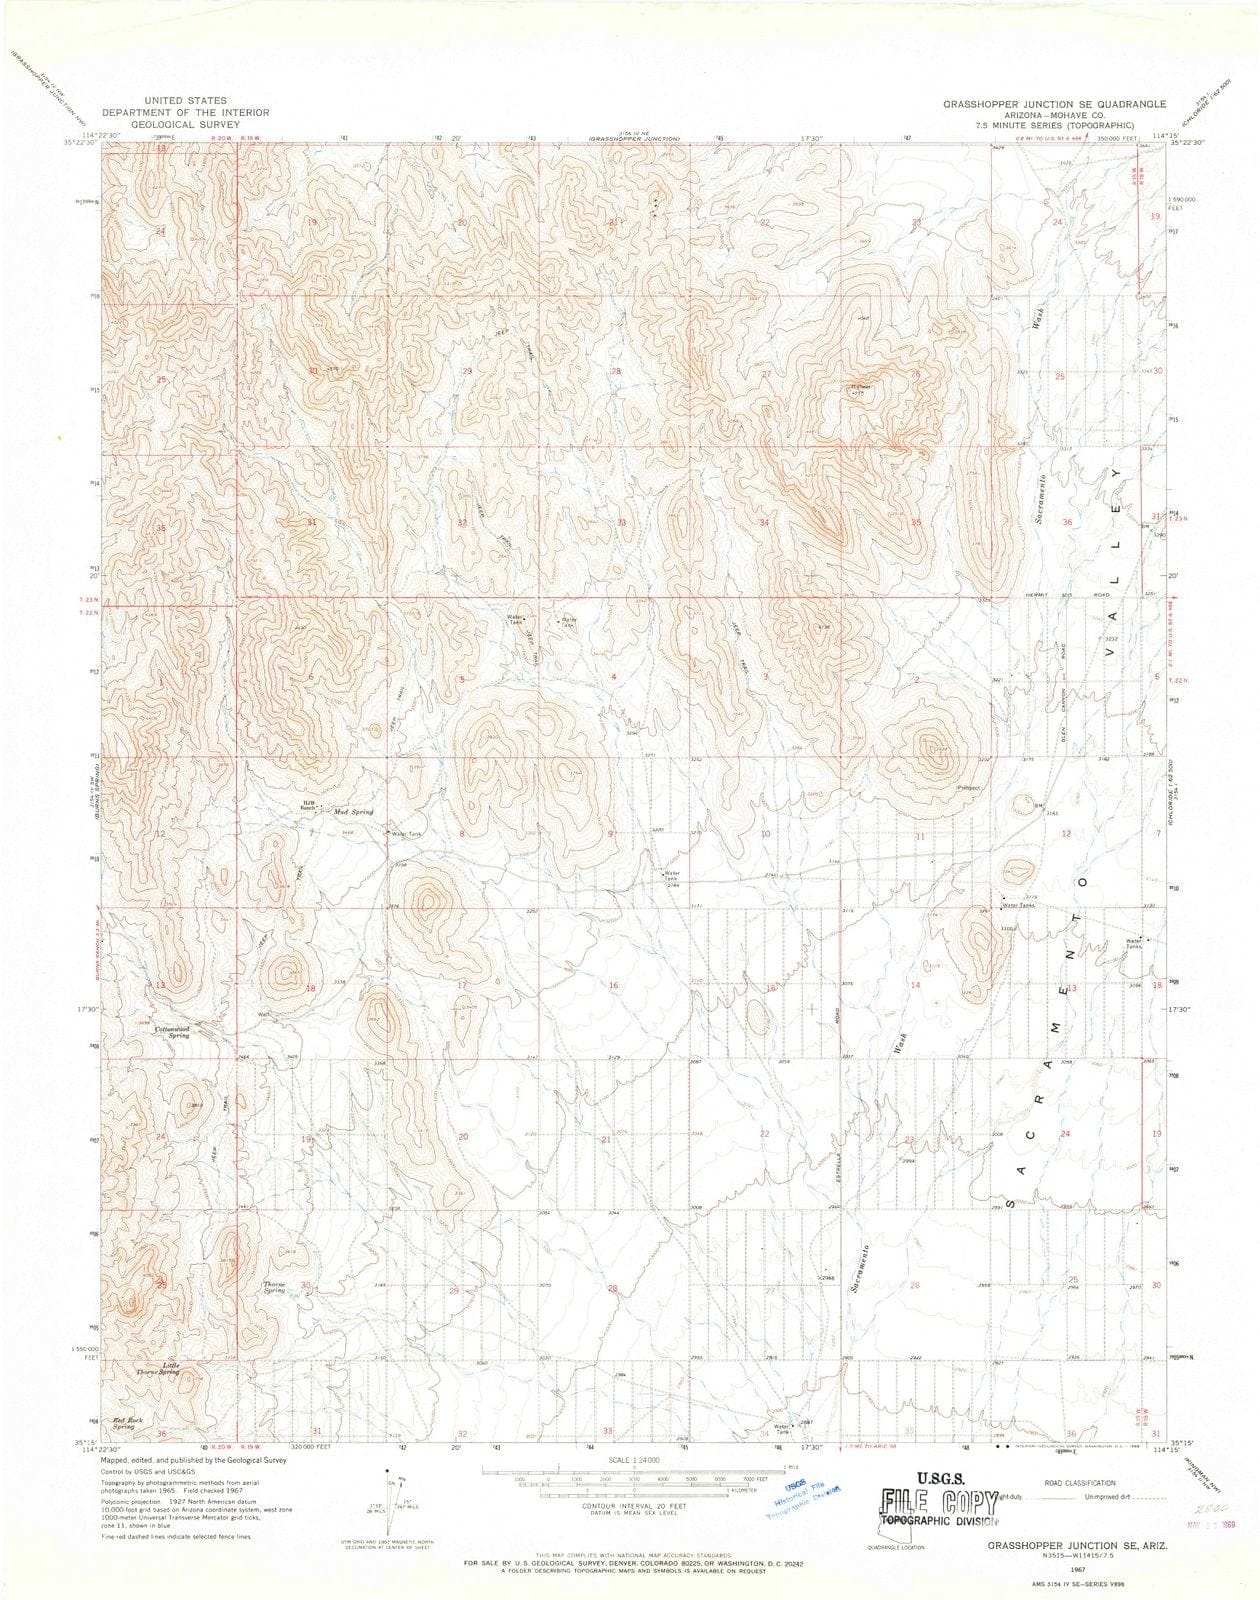 1967 Grasshopper Junction, AZ - Arizona - USGS Topographic Map v2